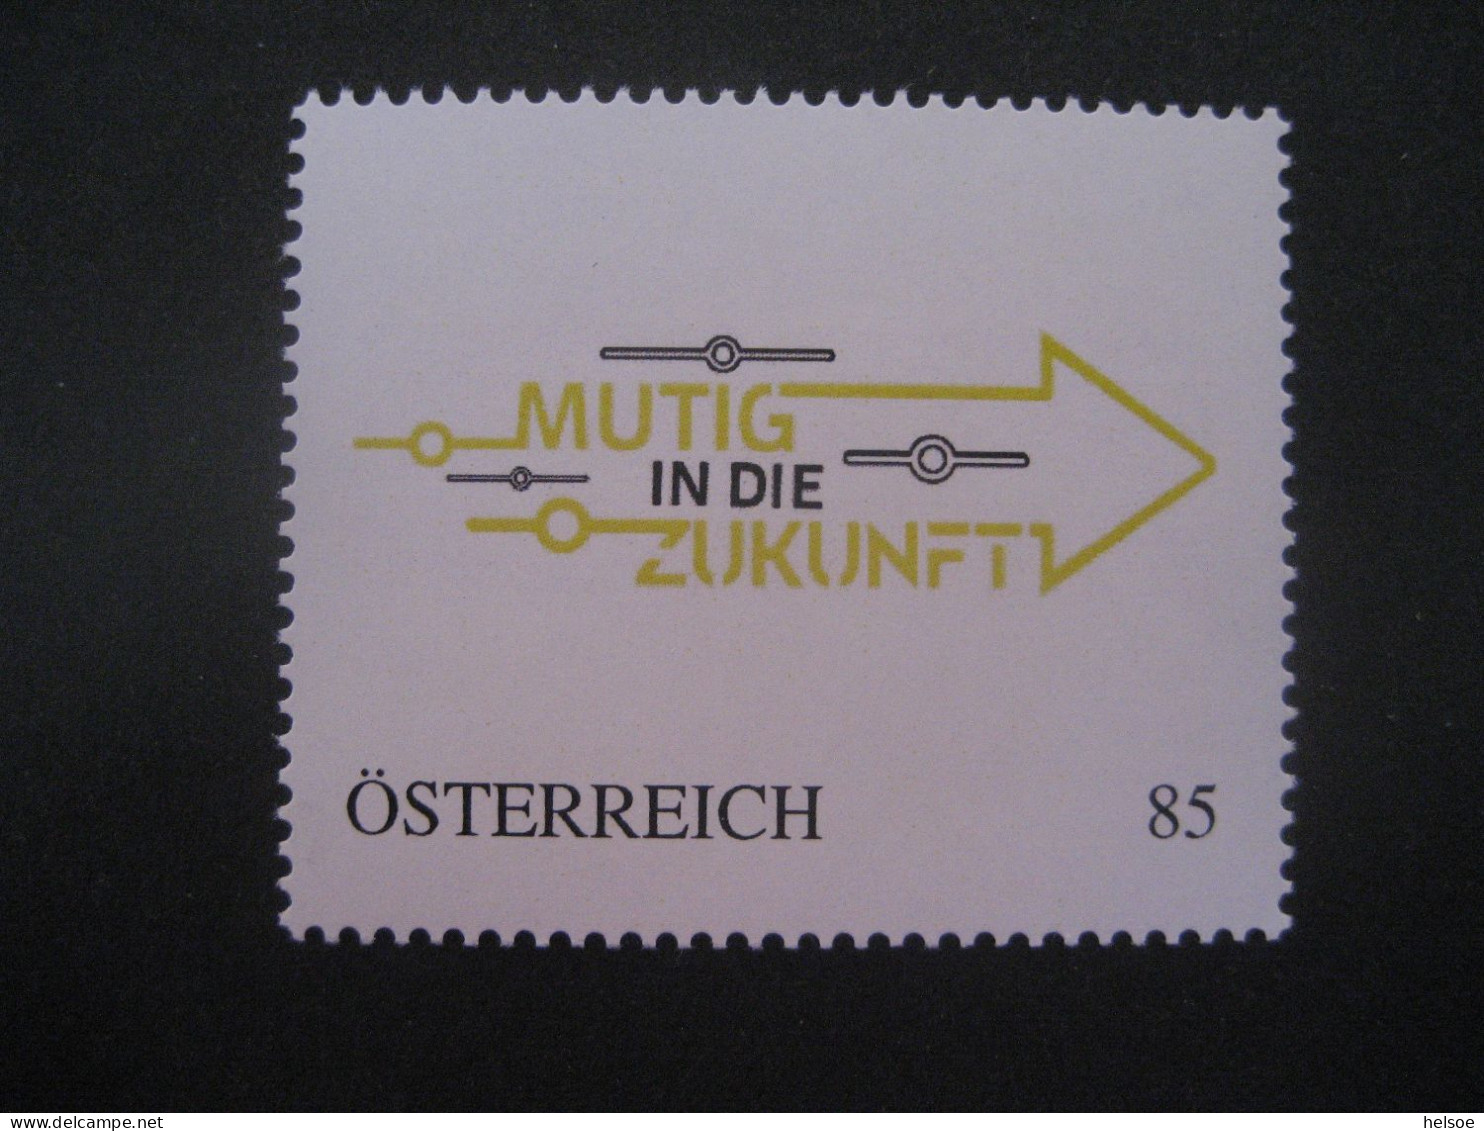 Österreich- PM 8132832, Mutig In Die Zukunft ** - Persoonlijke Postzegels